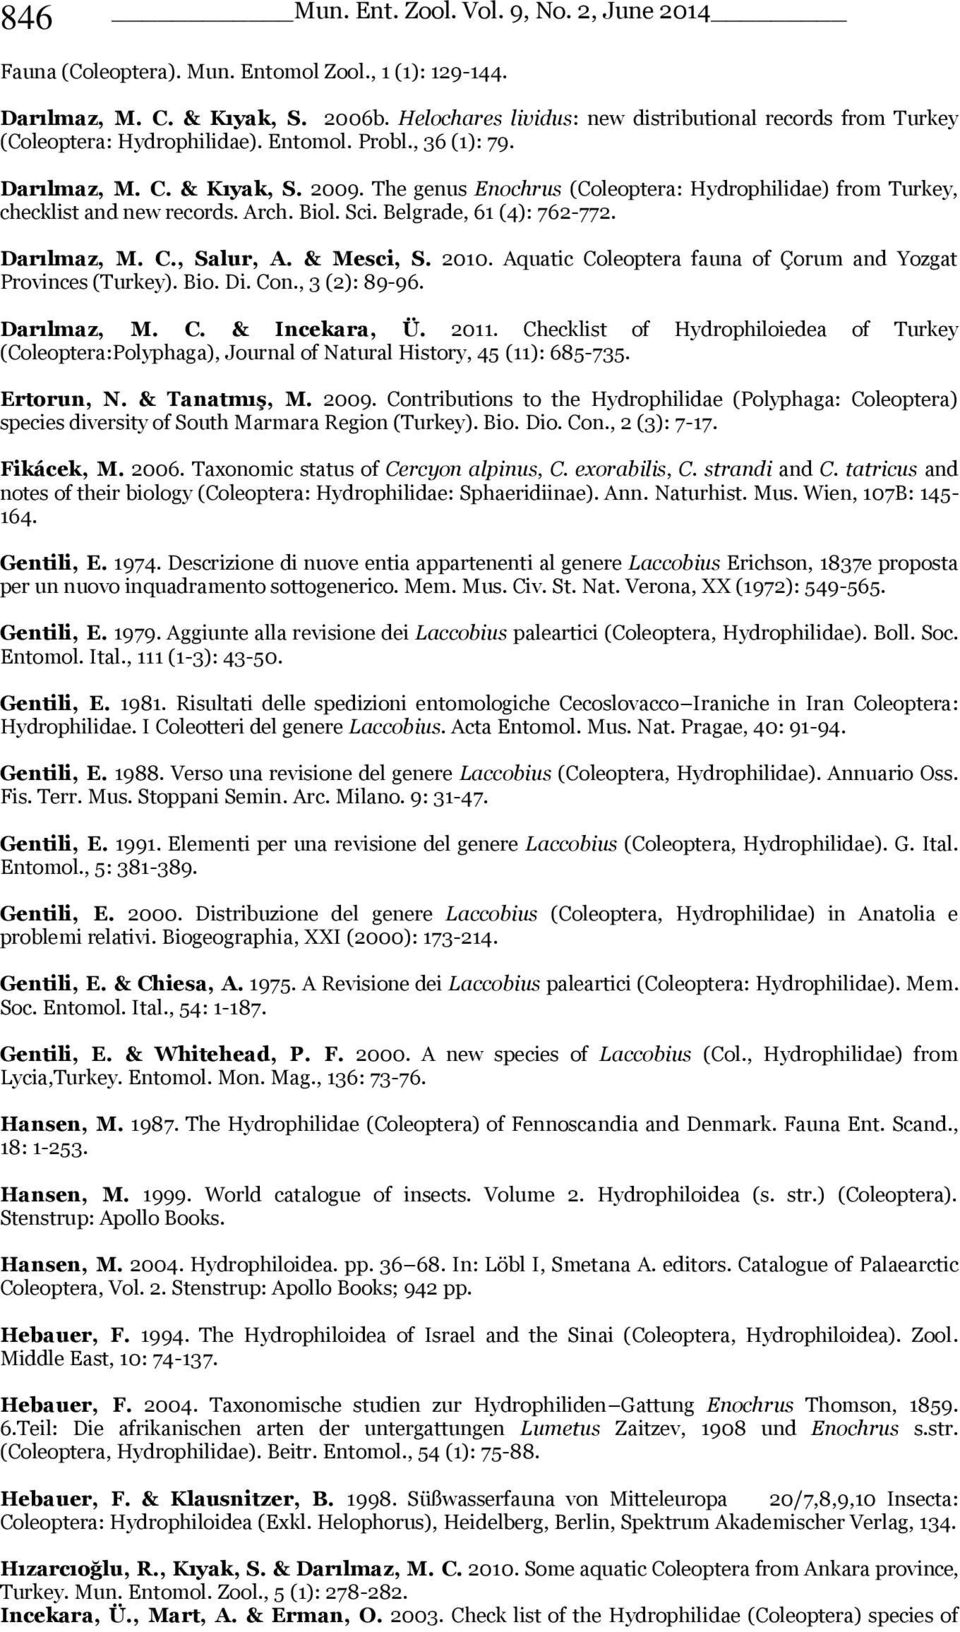 The genus Enochrus (Coleoptera: Hydrophilidae) from Turkey, checklist and new records. Arch. Biol. Sci. Belgrade, 61 (4): 762-772. Darılmaz, M. C., Salur, A. & Mesci, S. 2010.